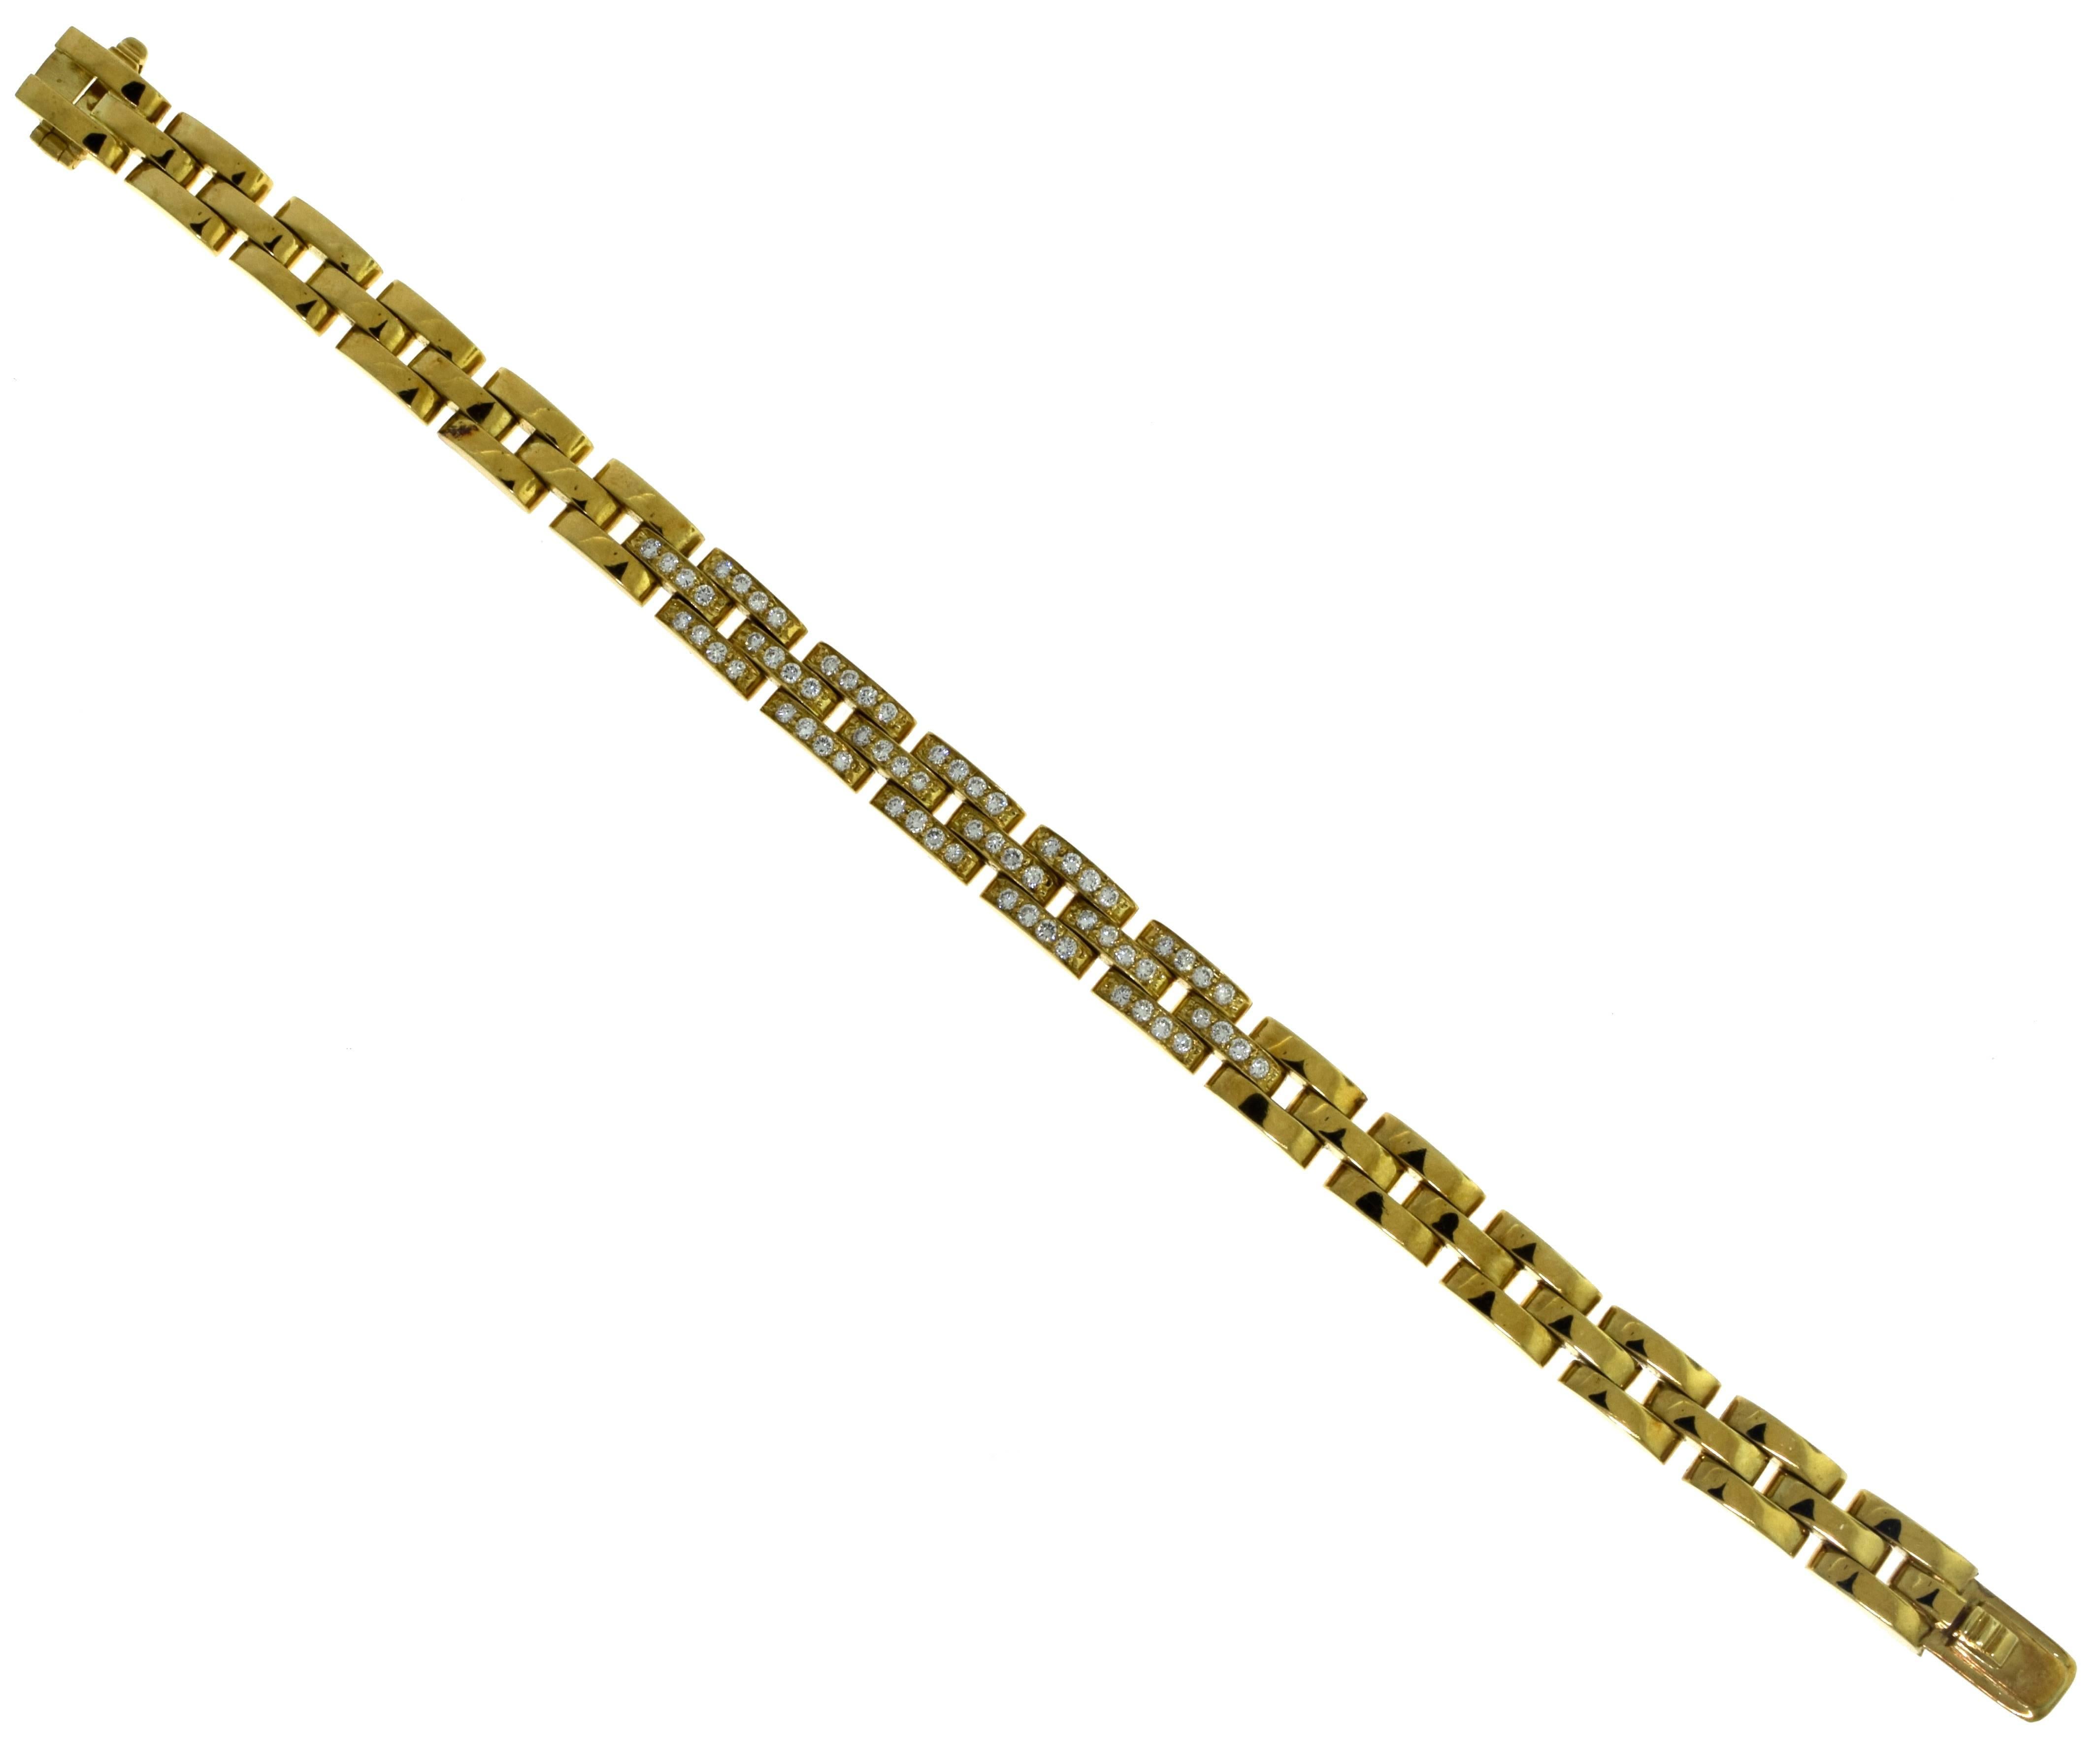 Metal: Yellow Gold
Metal Purity: 18k
Stones: 64 Round Brilliant Cut Diamonds
Total Carat Weight: 1.28 carat
Diamond Color: G - H
Diamond Clarity: VS
Total Item Weight (g): 37.2
Bracelet Length: 7.75 inches
Bracelet Width: 0.25 inches
Hallmark: